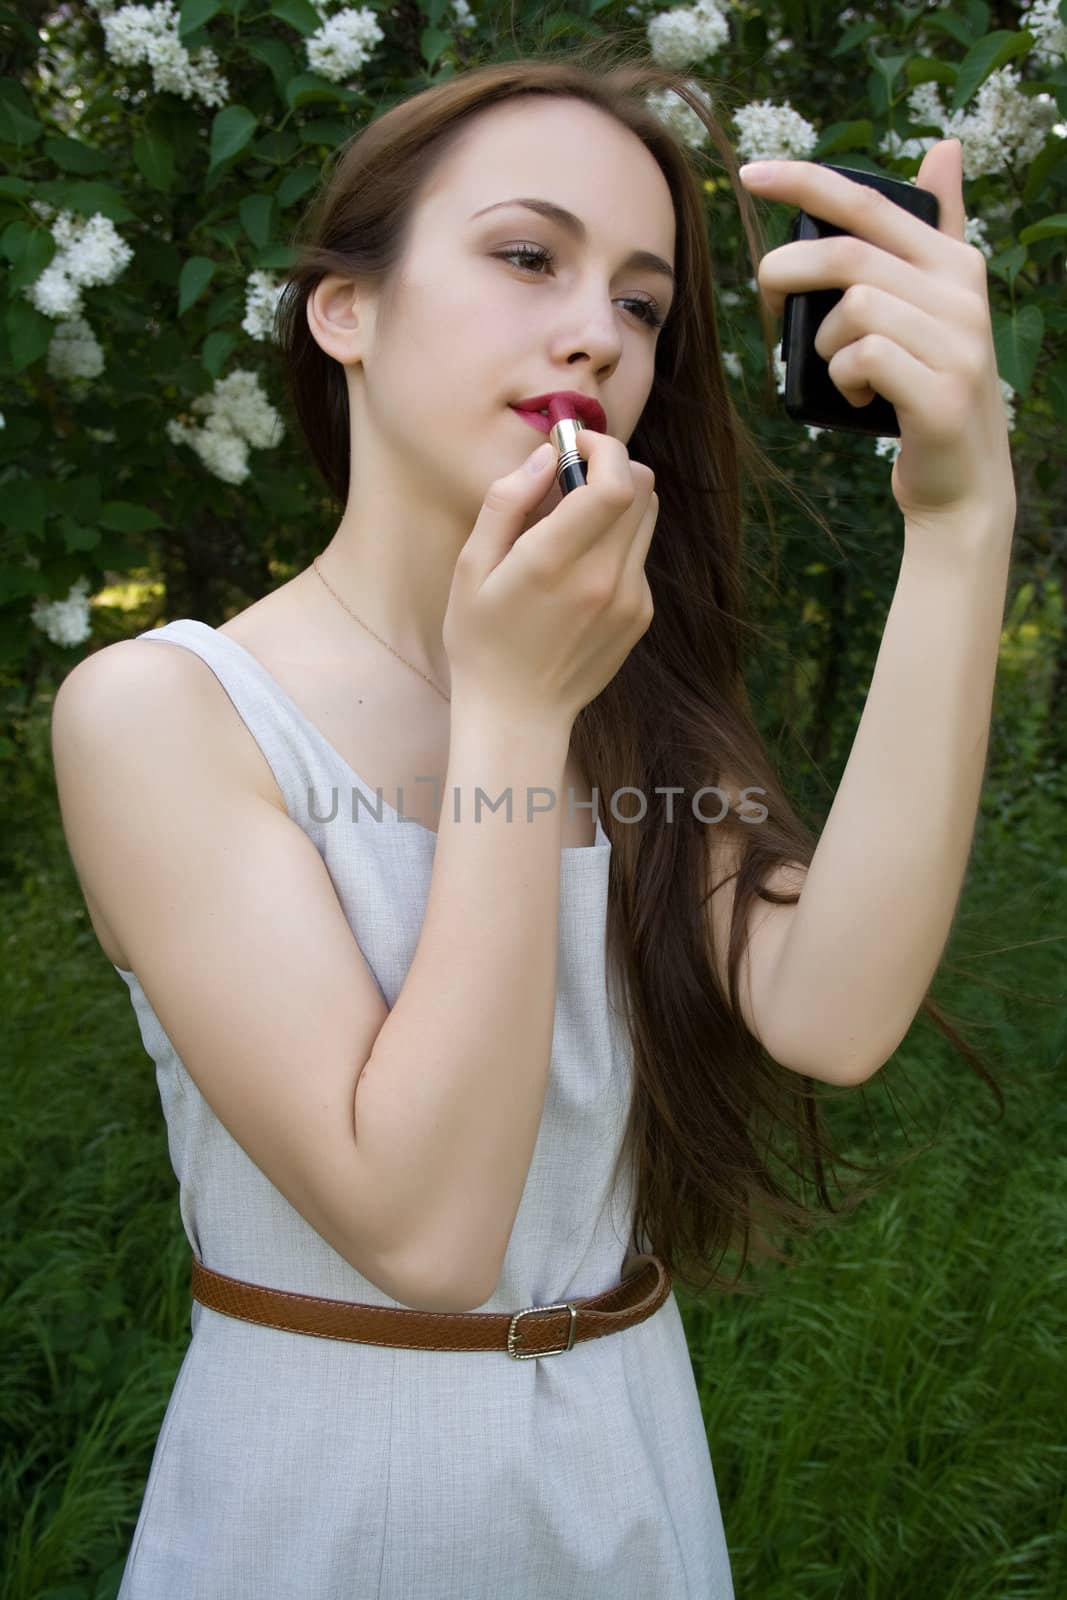 Girl applying lipstick on the lips